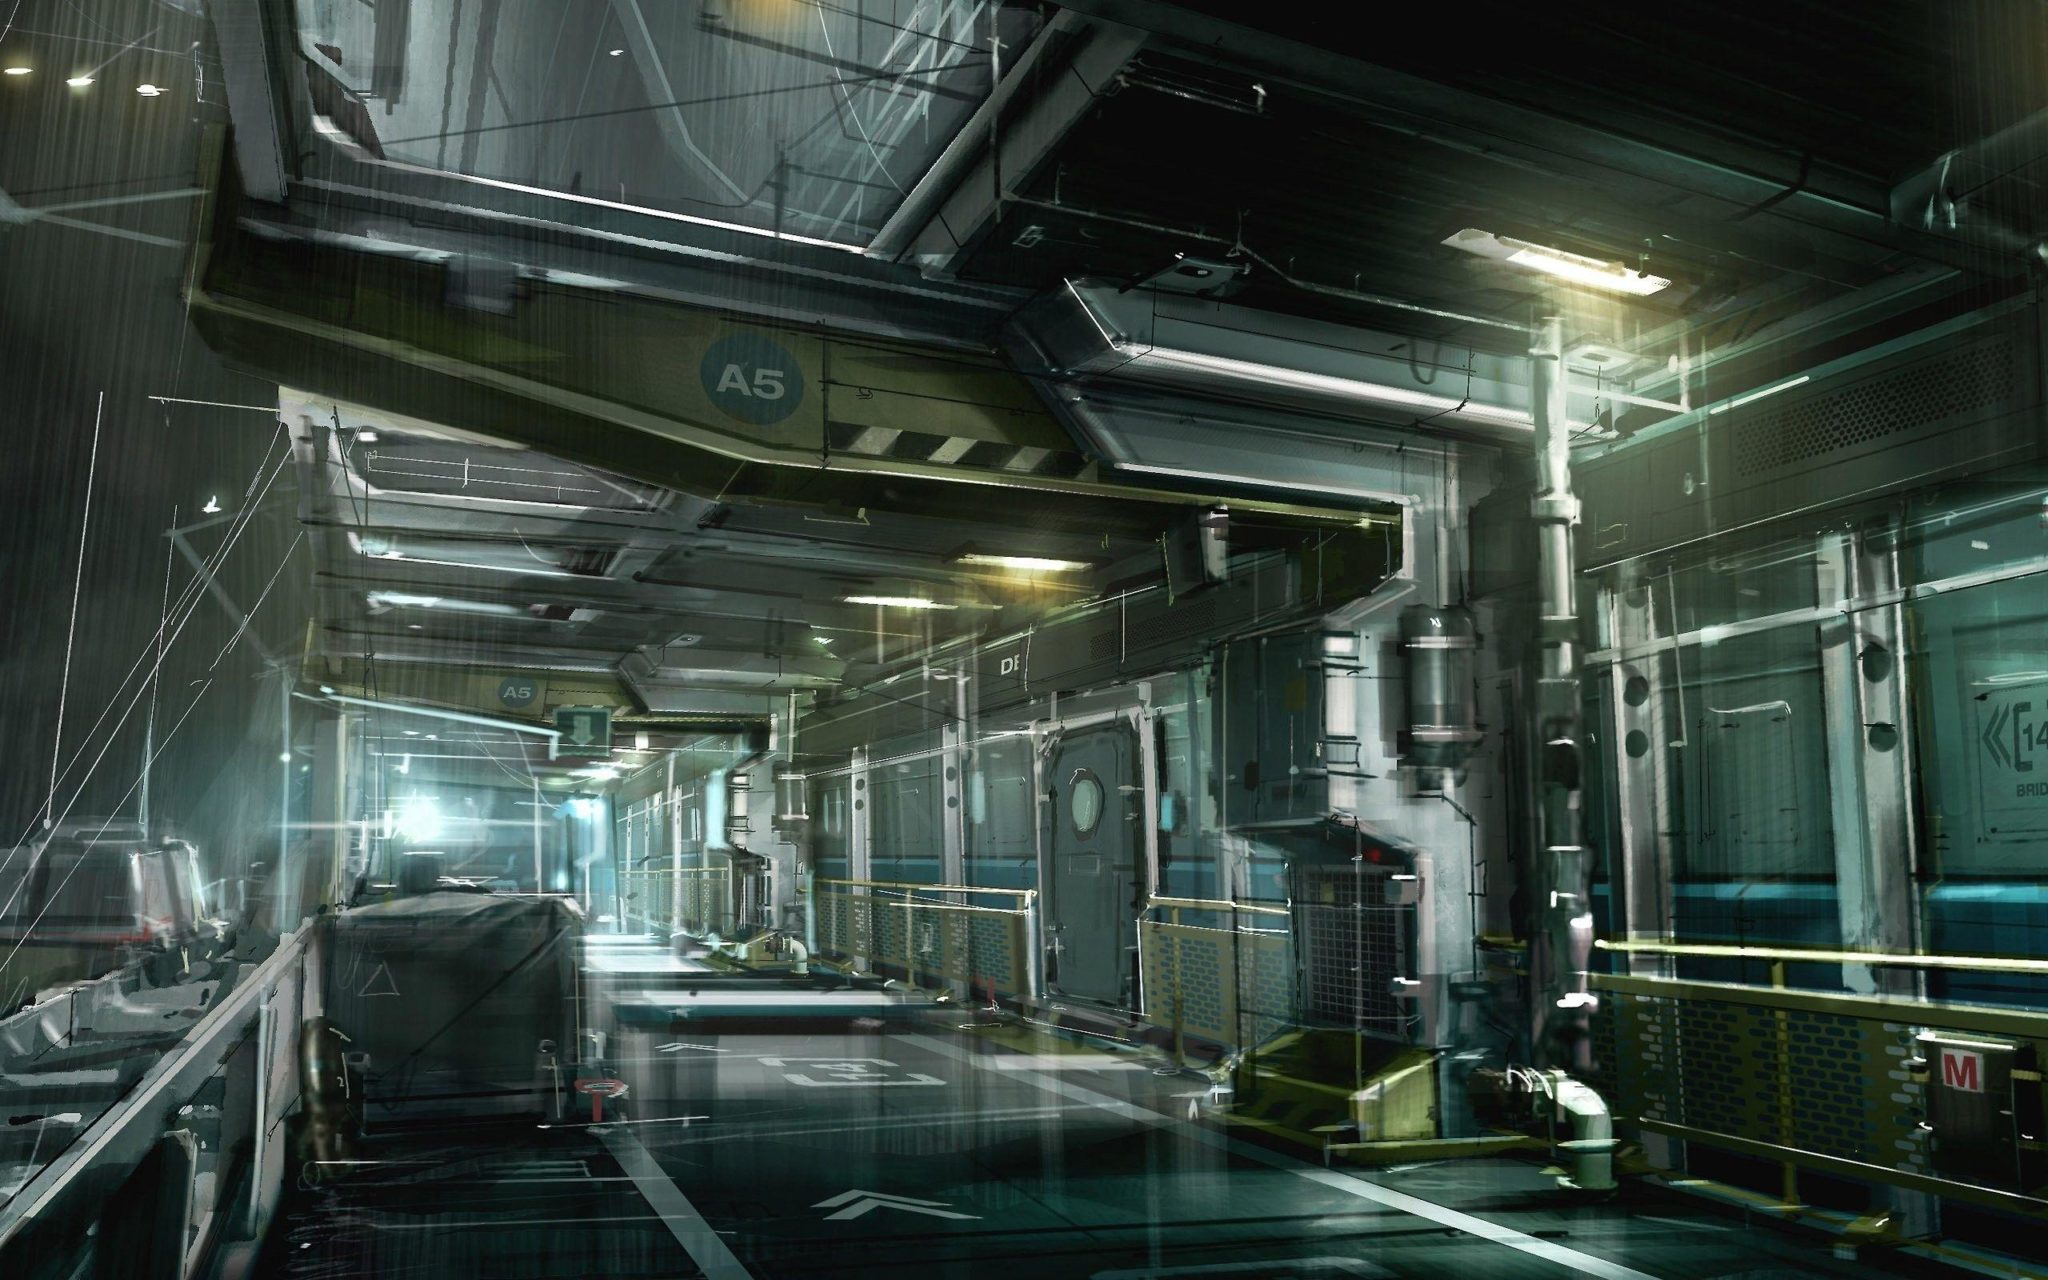 Sci-Fi Cyberpunk лаборатория